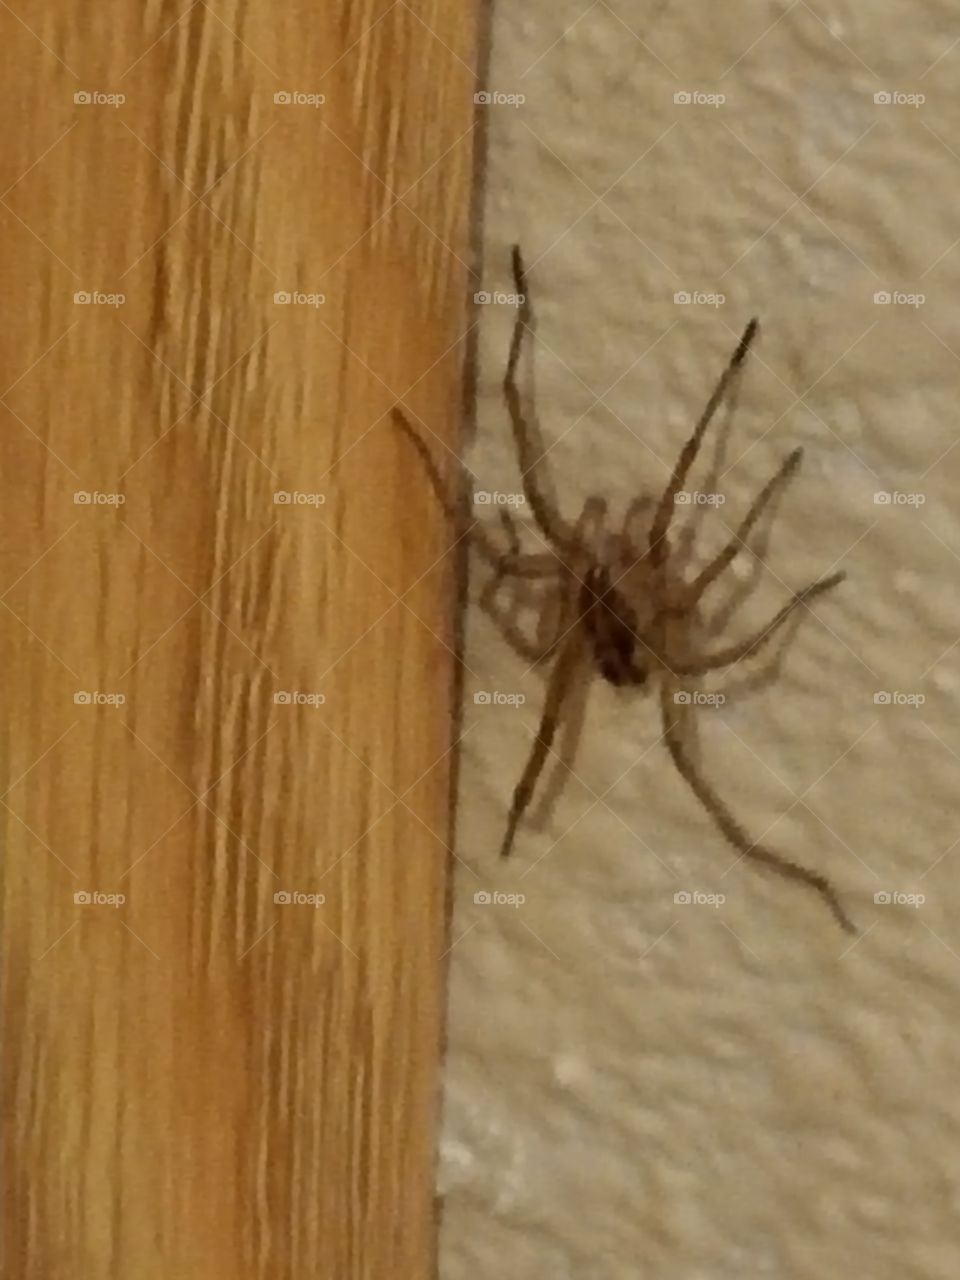 Spider In Corner